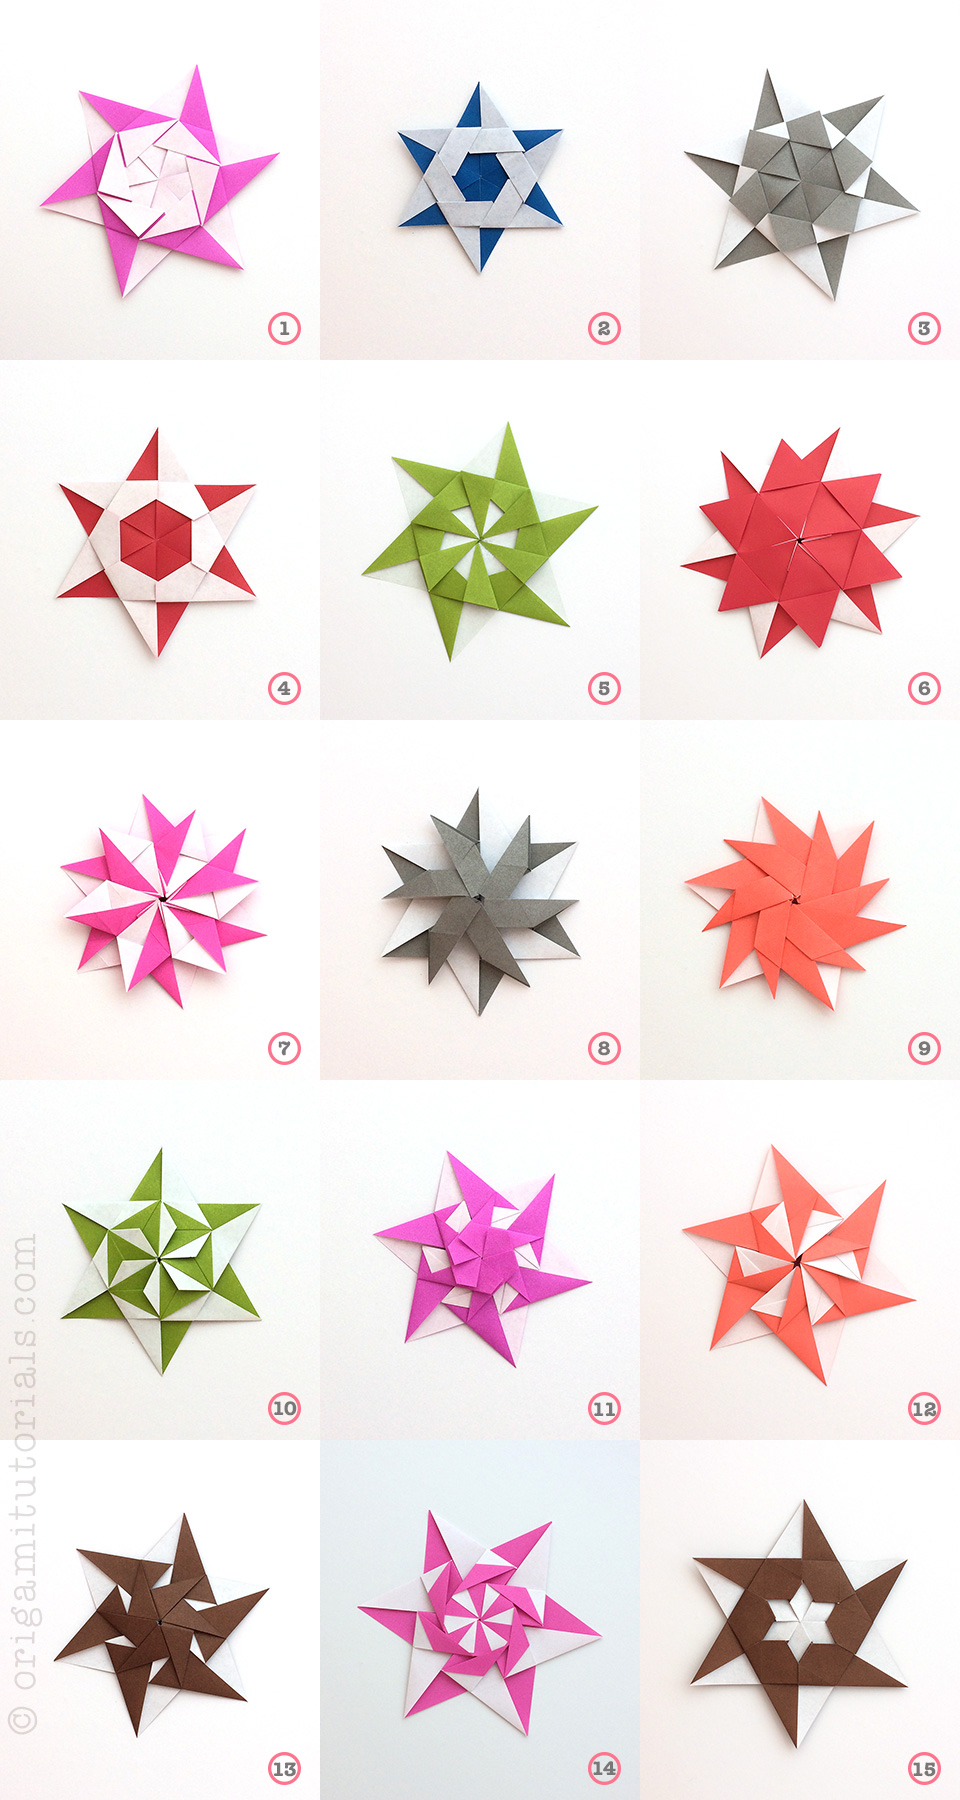 Origami Star How To Make 15 Chameleon Origami Stars Tutorial Origami Tutorials